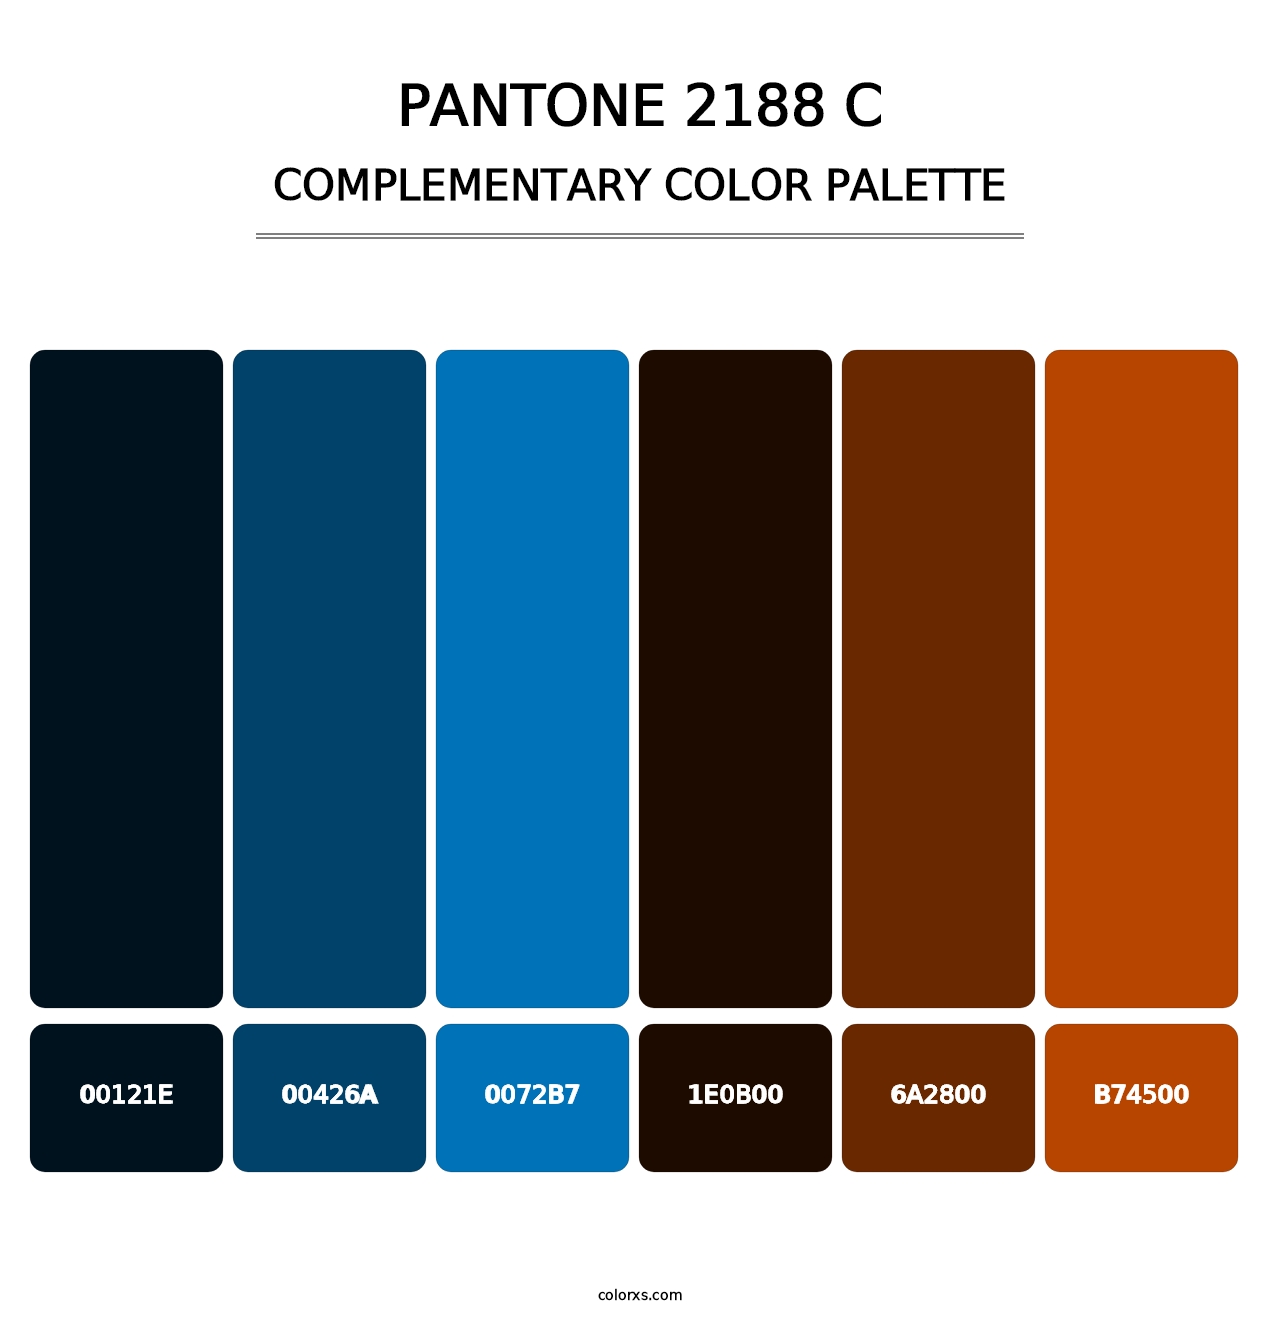 PANTONE 2188 C - Complementary Color Palette